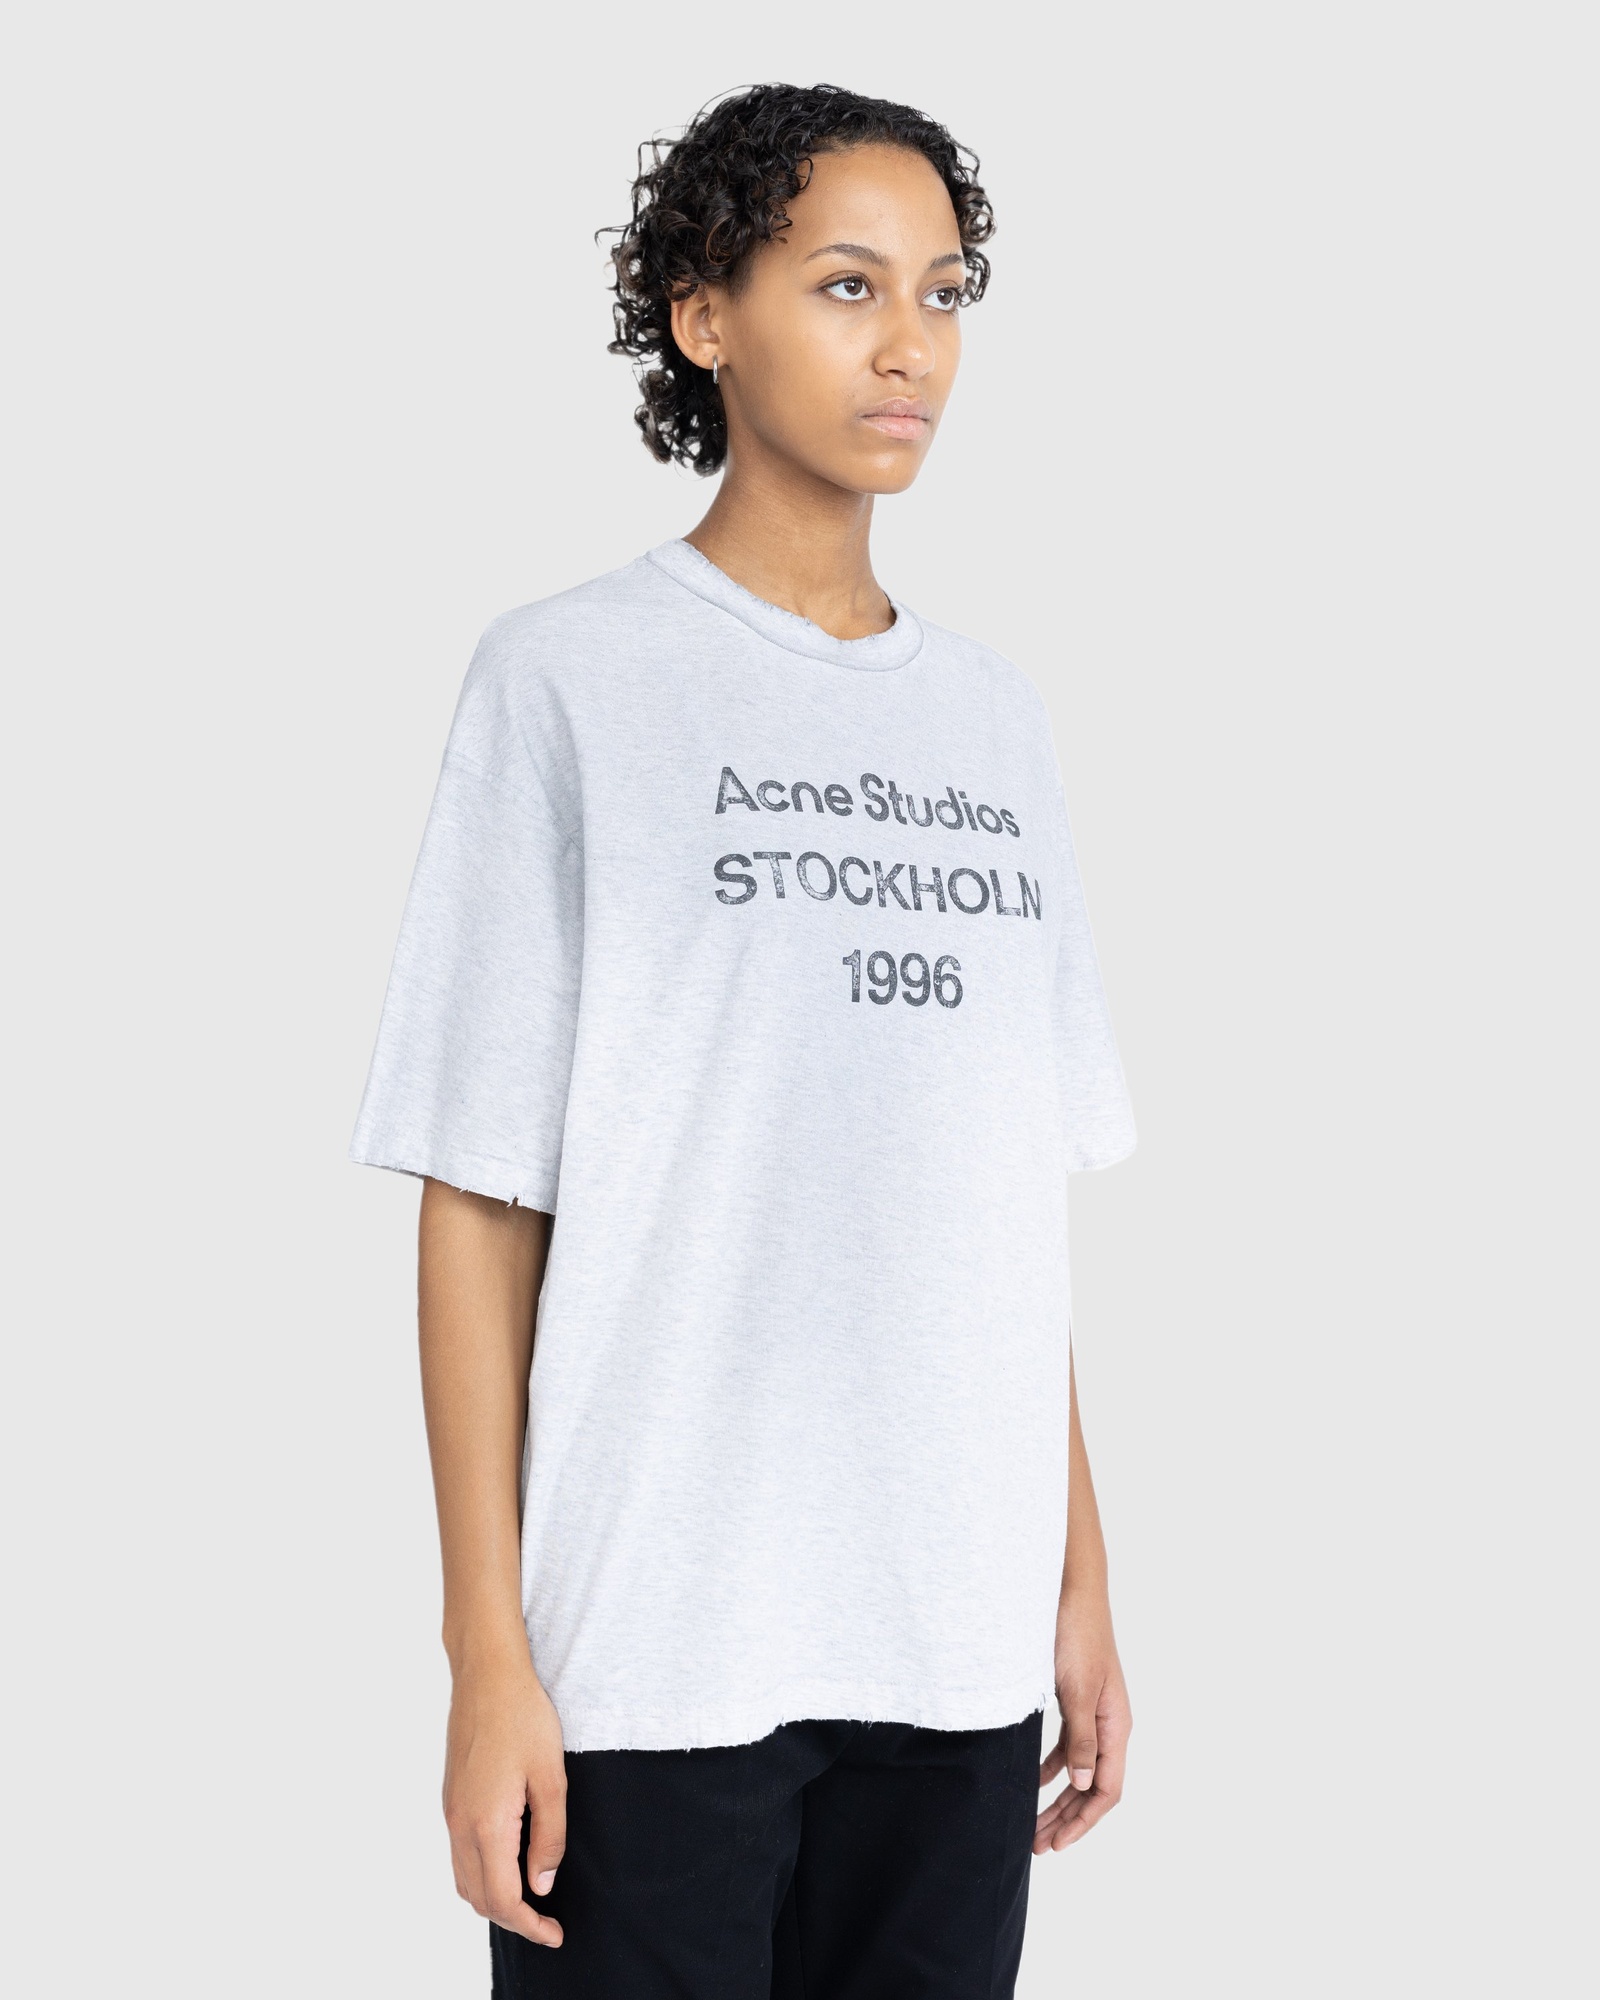 Acne Studios – Stockholm 1996 T-Shirt Grey | Highsnobiety Shop